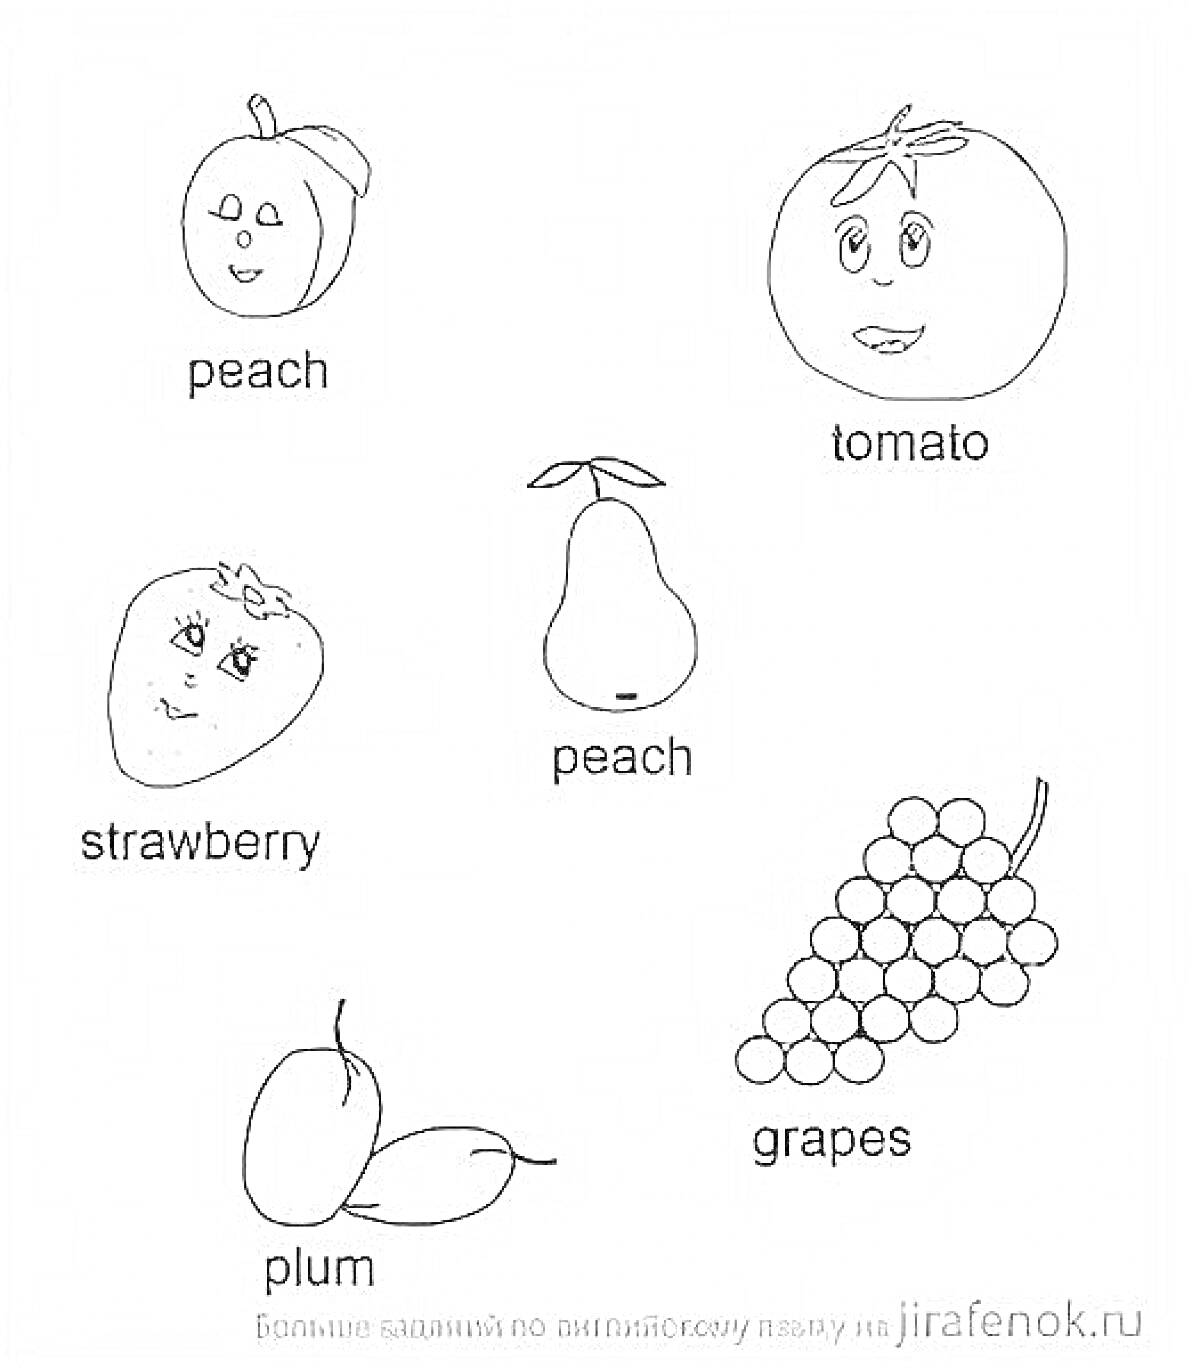 Персик, томат, клубника, груша, виноград, слива